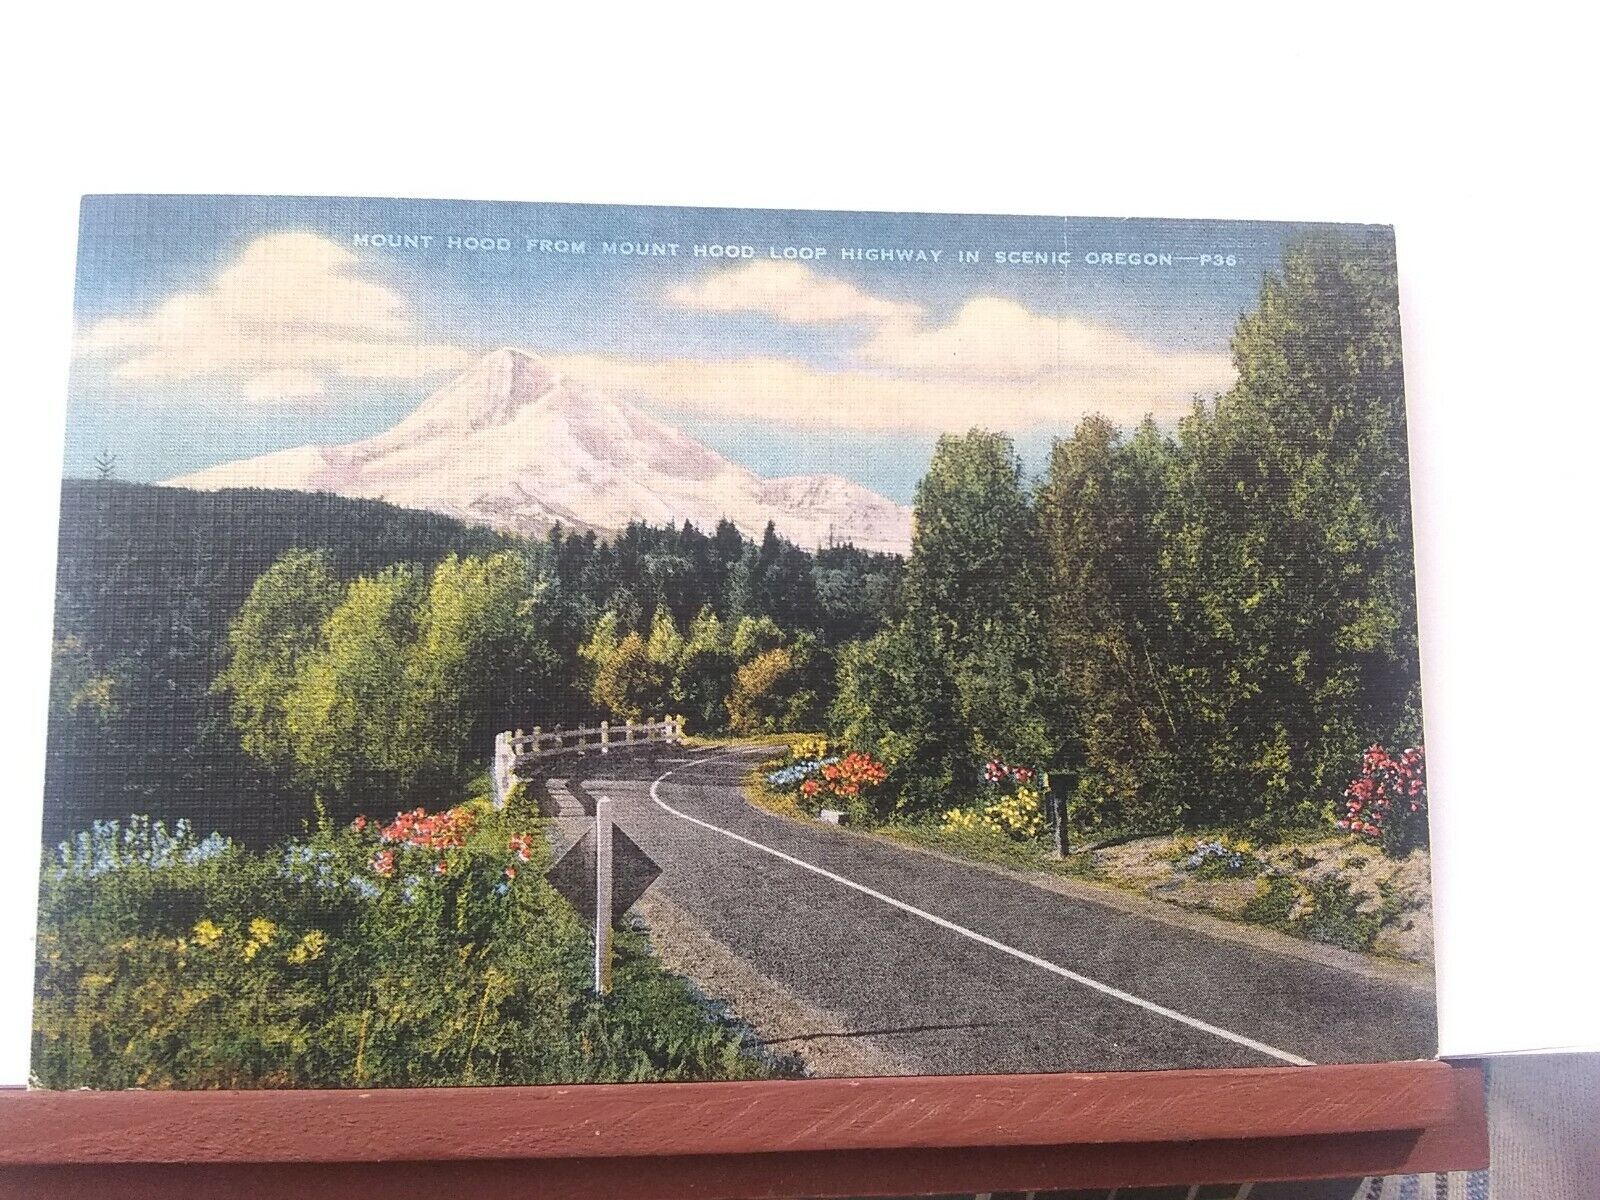 VTG postcard Mount Hood, Mount Hood loop highway ,Oregon